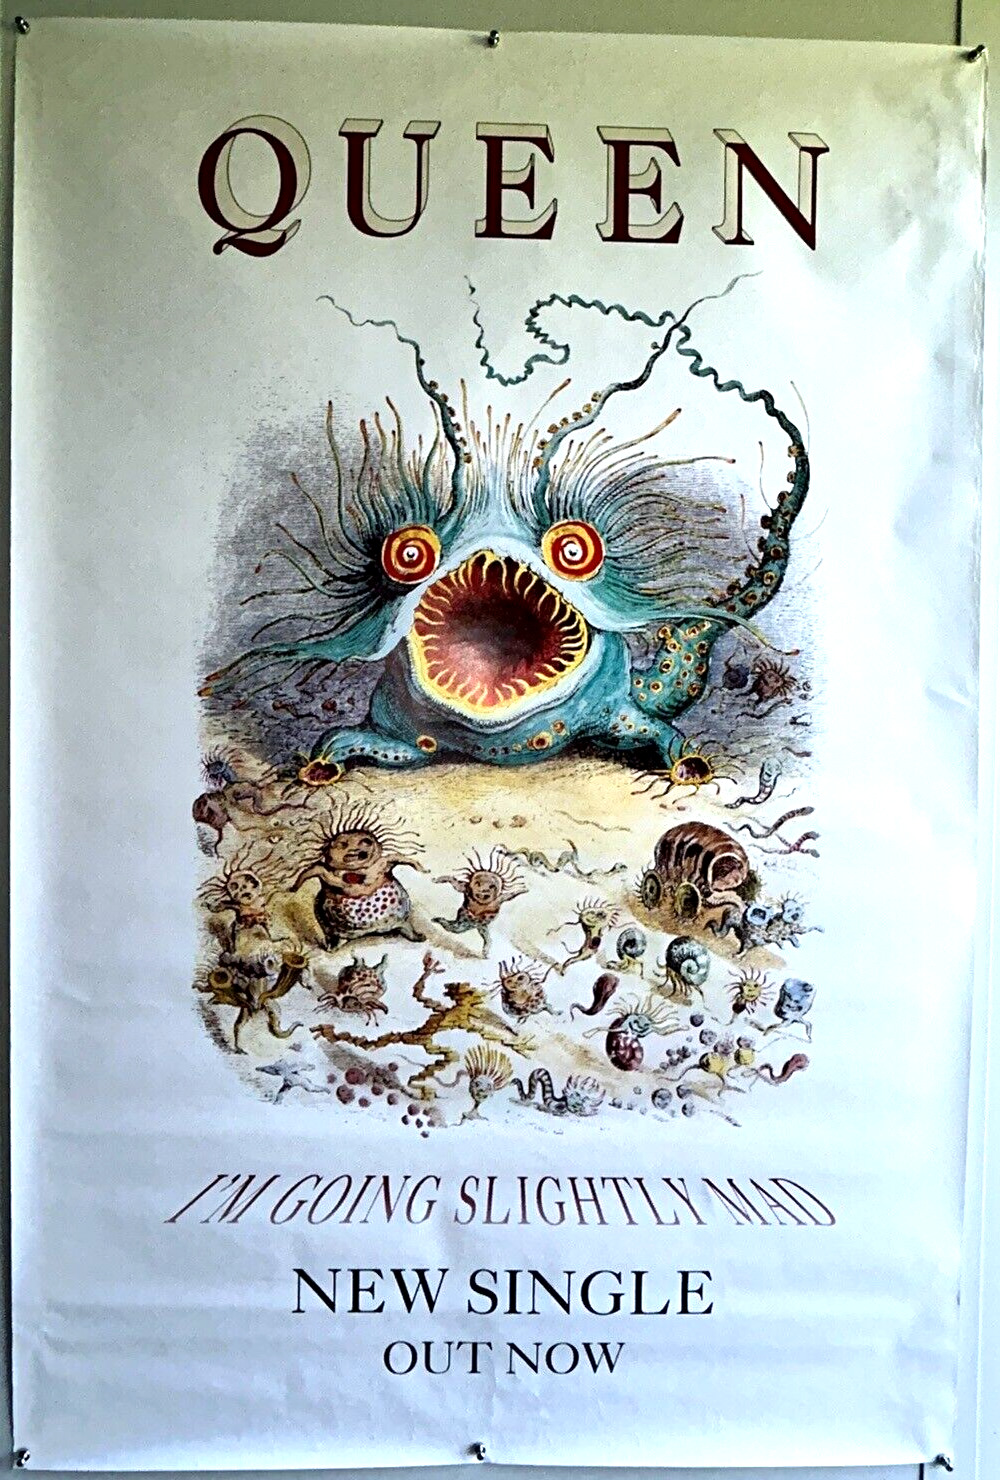 Queen Poster Freddie Mercury Billboard I\'m Going Slightly Mad Single Promo 1991